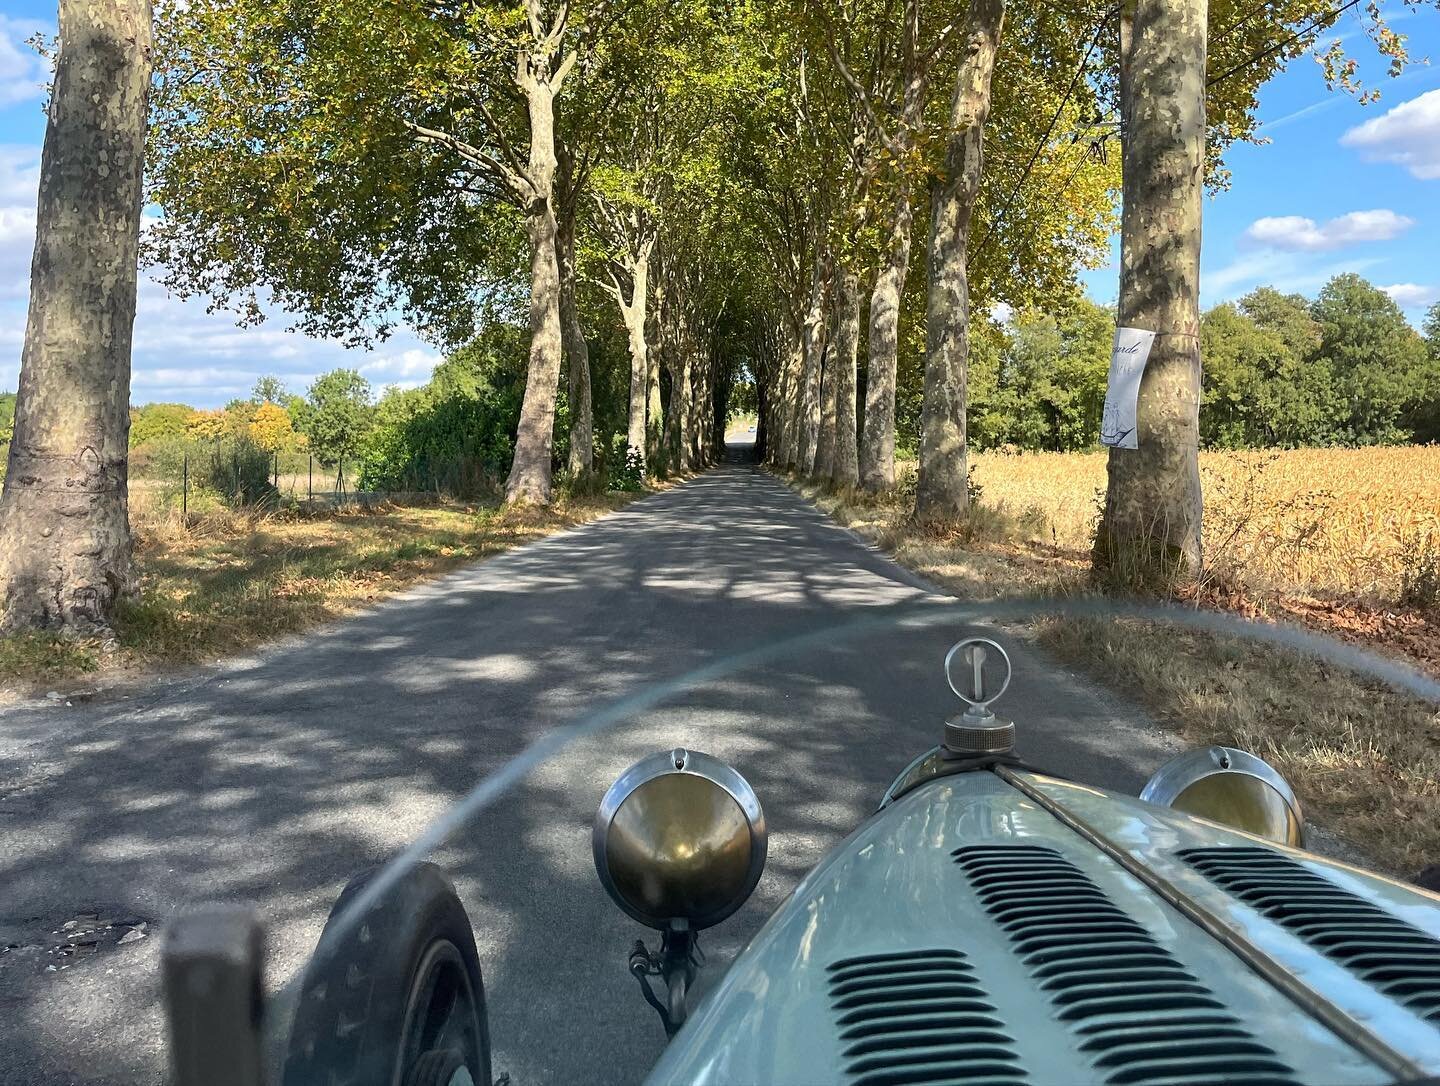 Type 39 Bugatti engine testing after its rebuild here. 400kms of France, torrential rain, sunshine and vineyards all conquered 👌#bugatti #bugattit39 #bugattigp